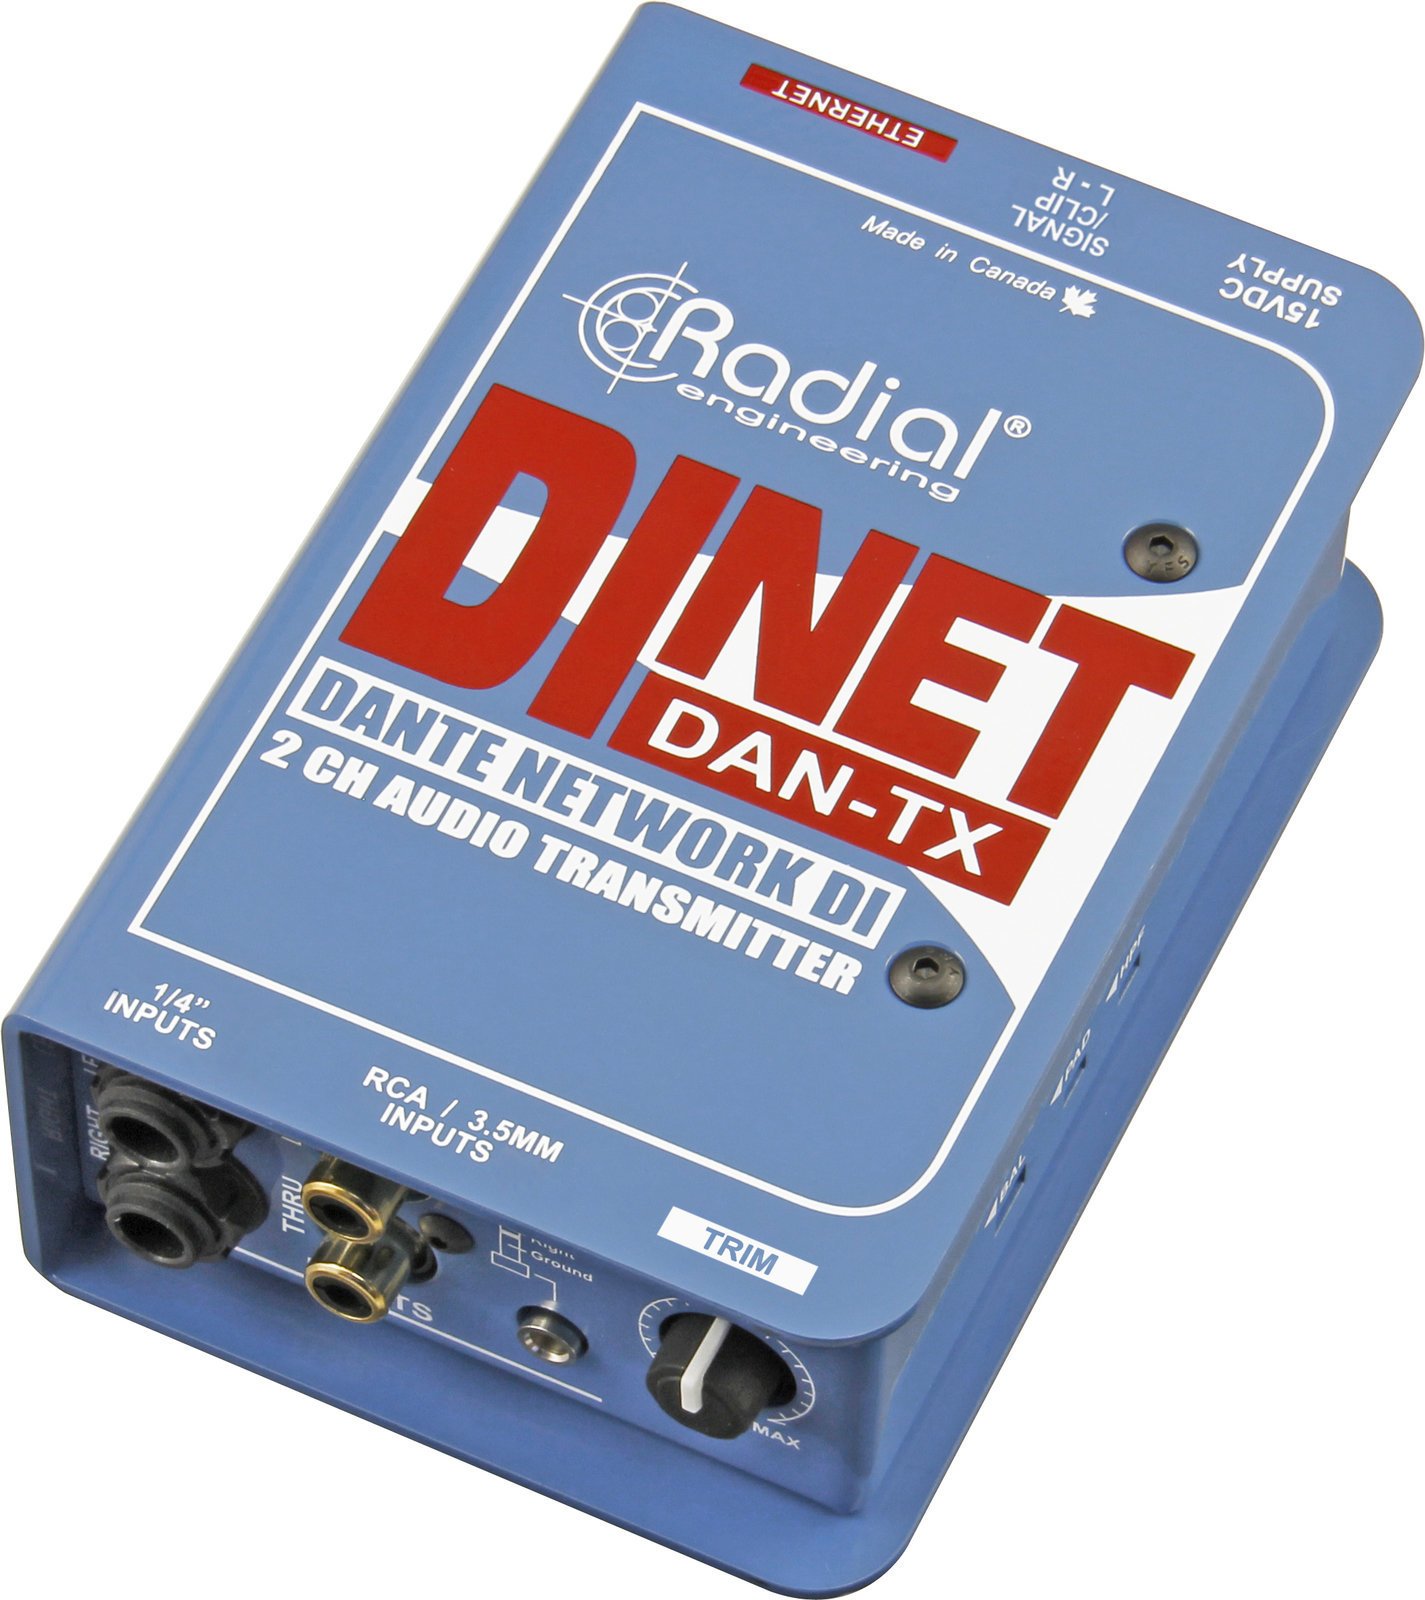 Procesor de sunet Radial DiNET DAN-TX2